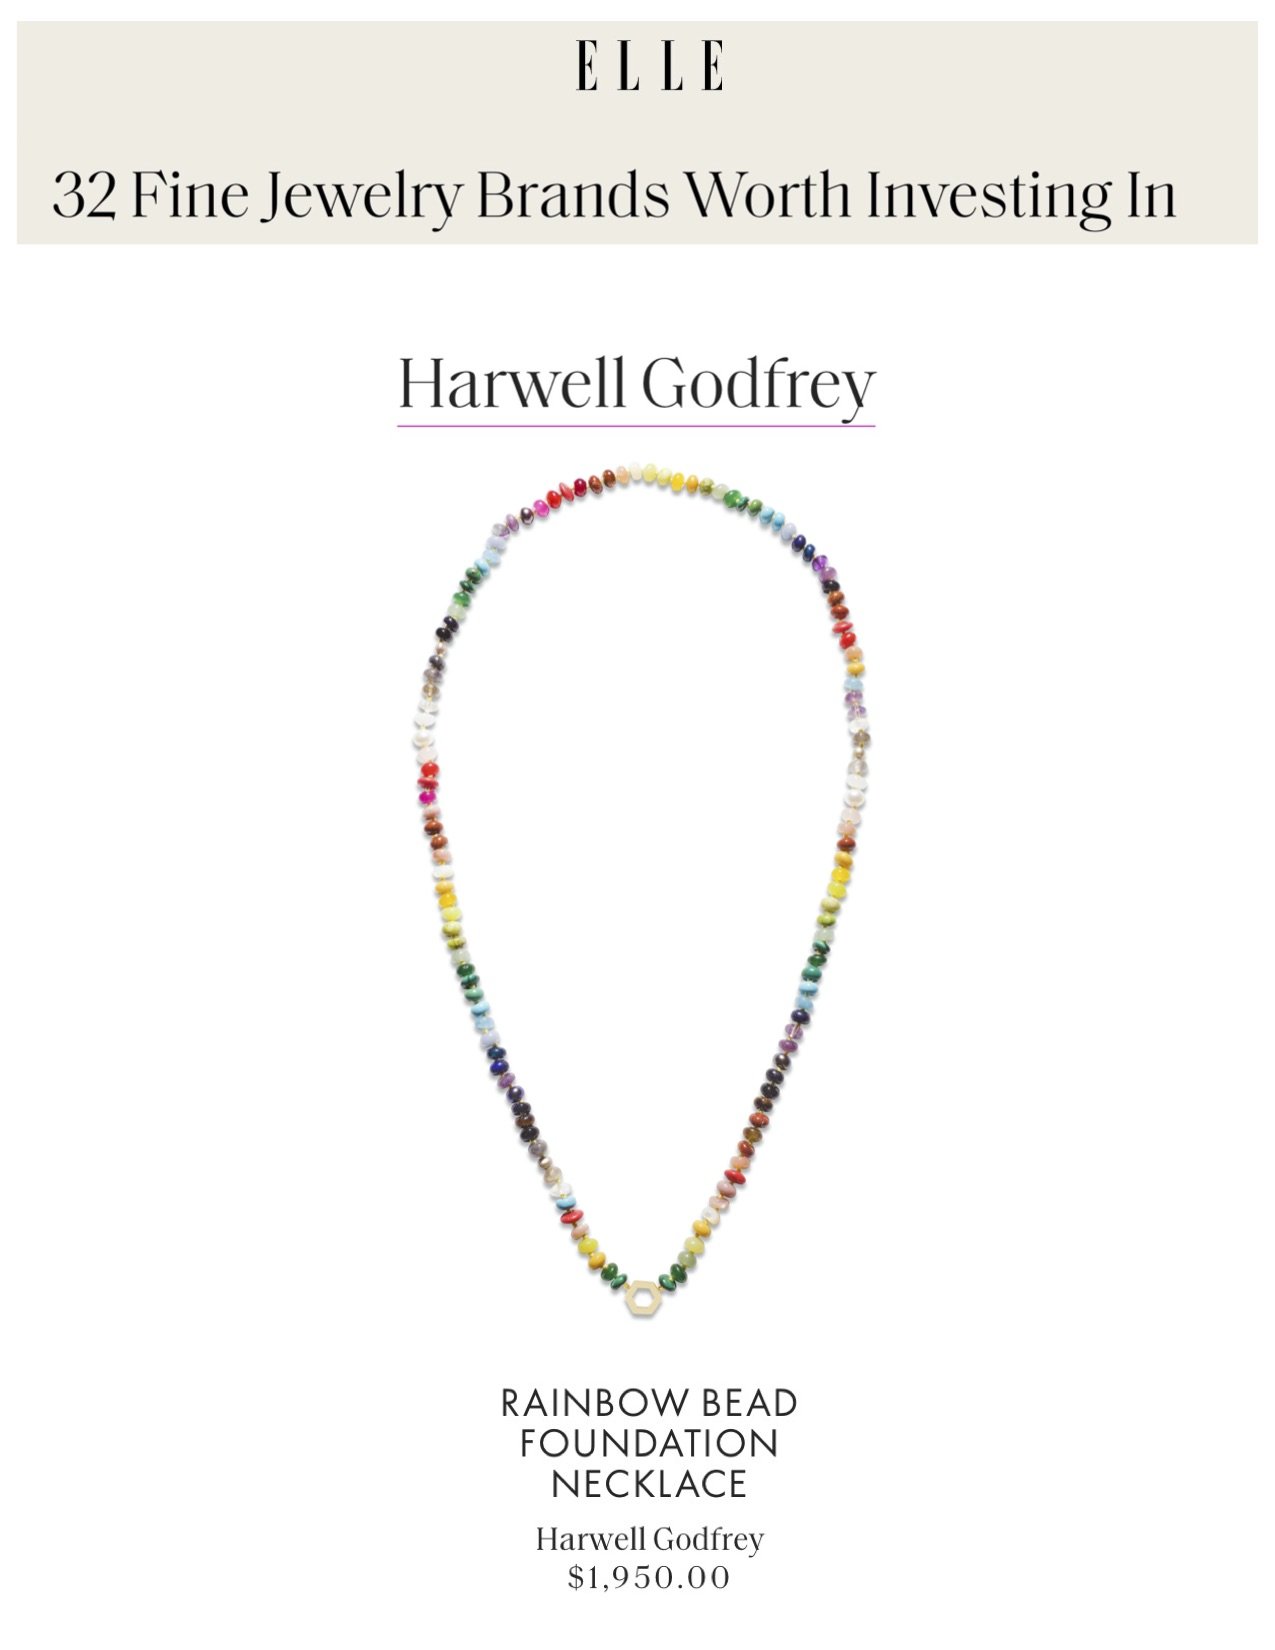 Harwell Godfrey on Elle.com, January 2022